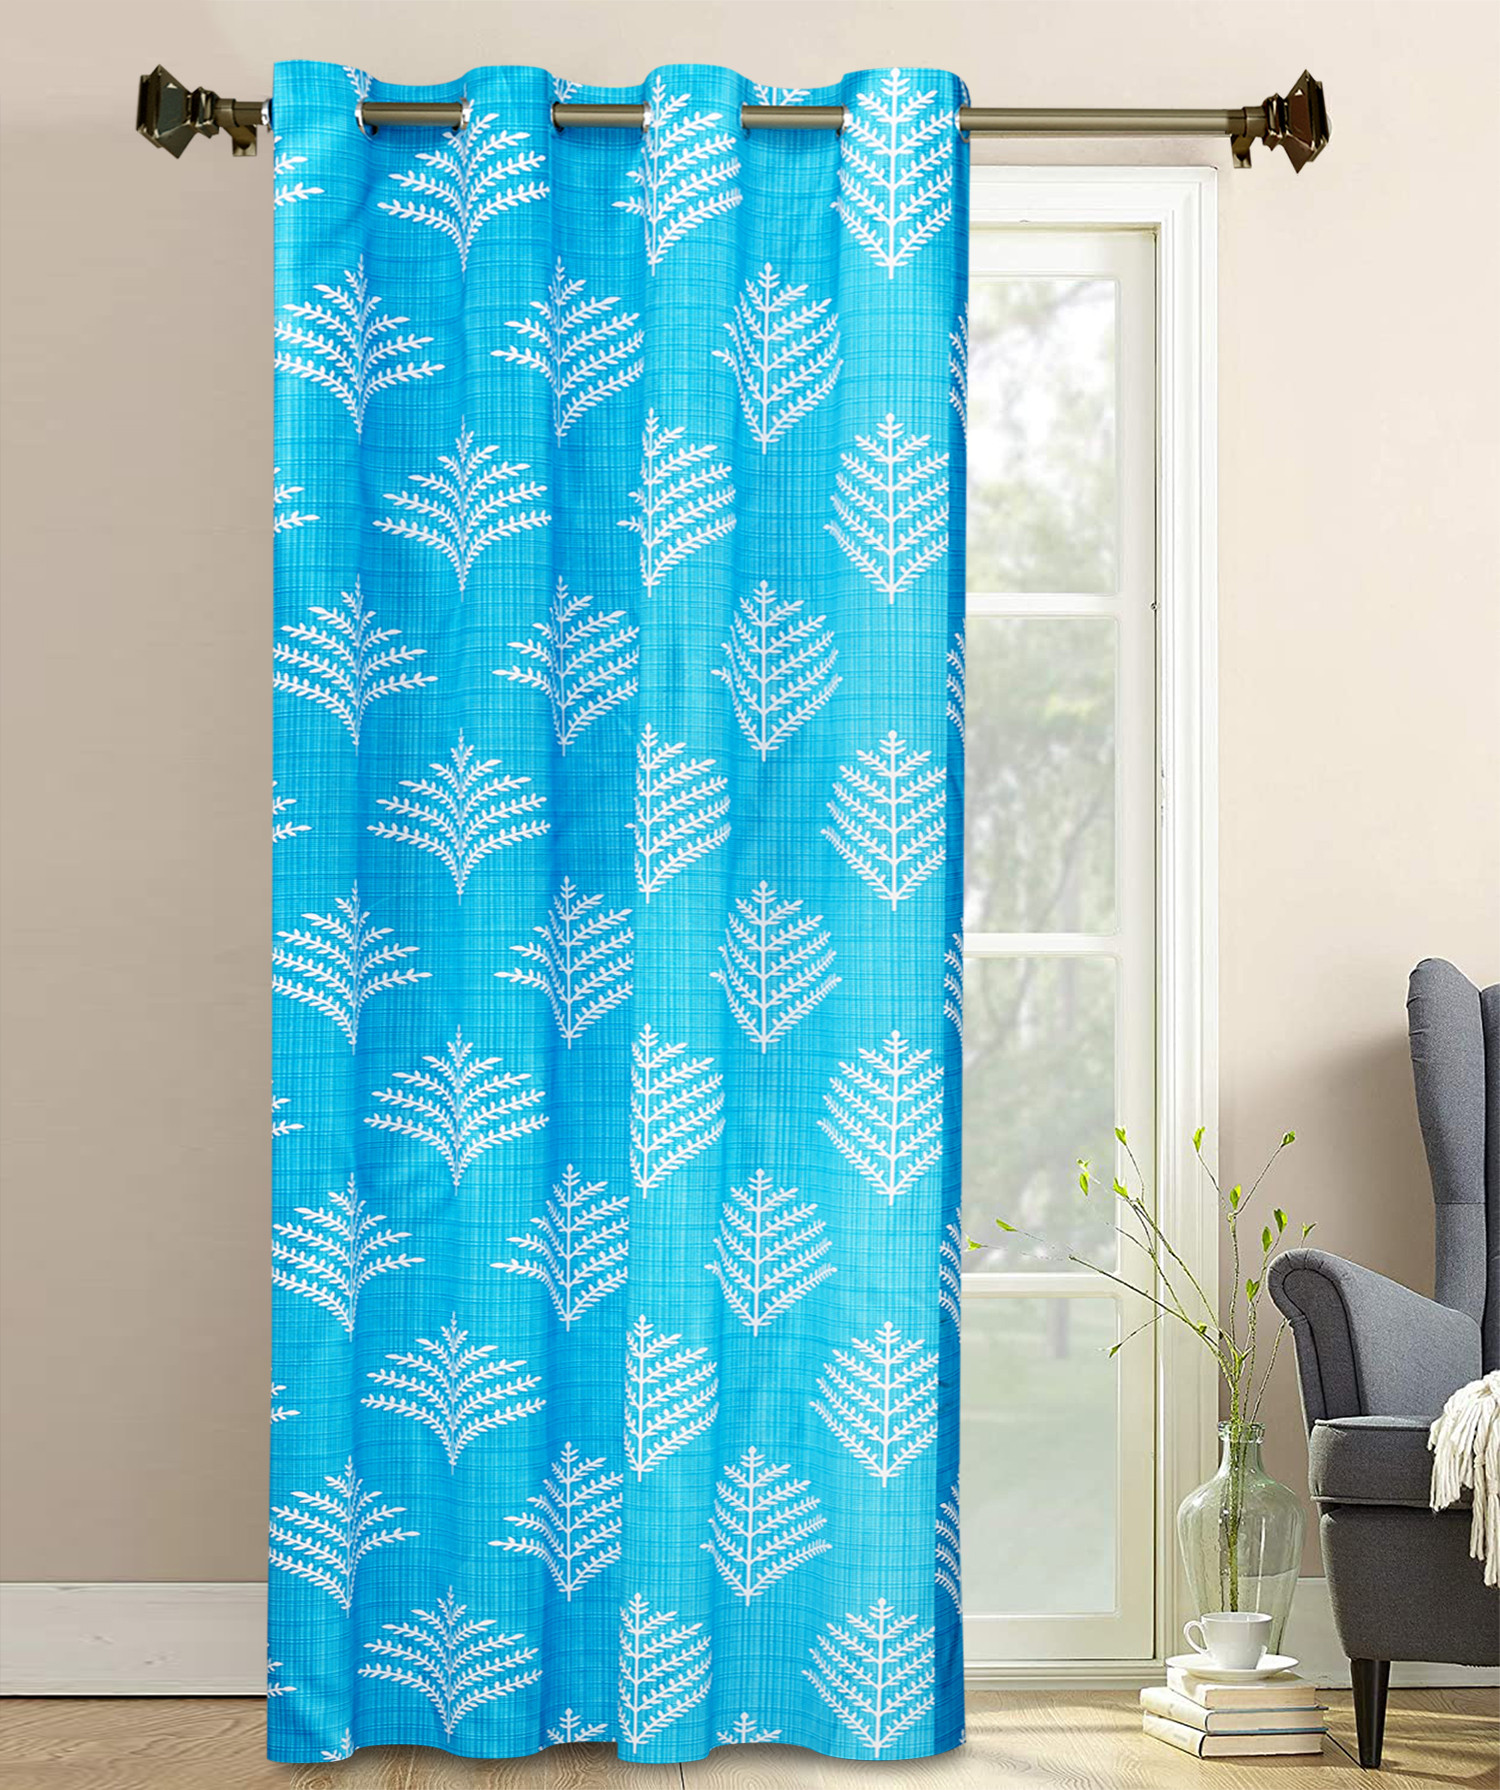 Kuber Industries Leaf Printed 7 Feet Door Curtain For Living Room, Bed Room, Kids Room With 8 Eyelet (Blue)-HS43KUBMART25589